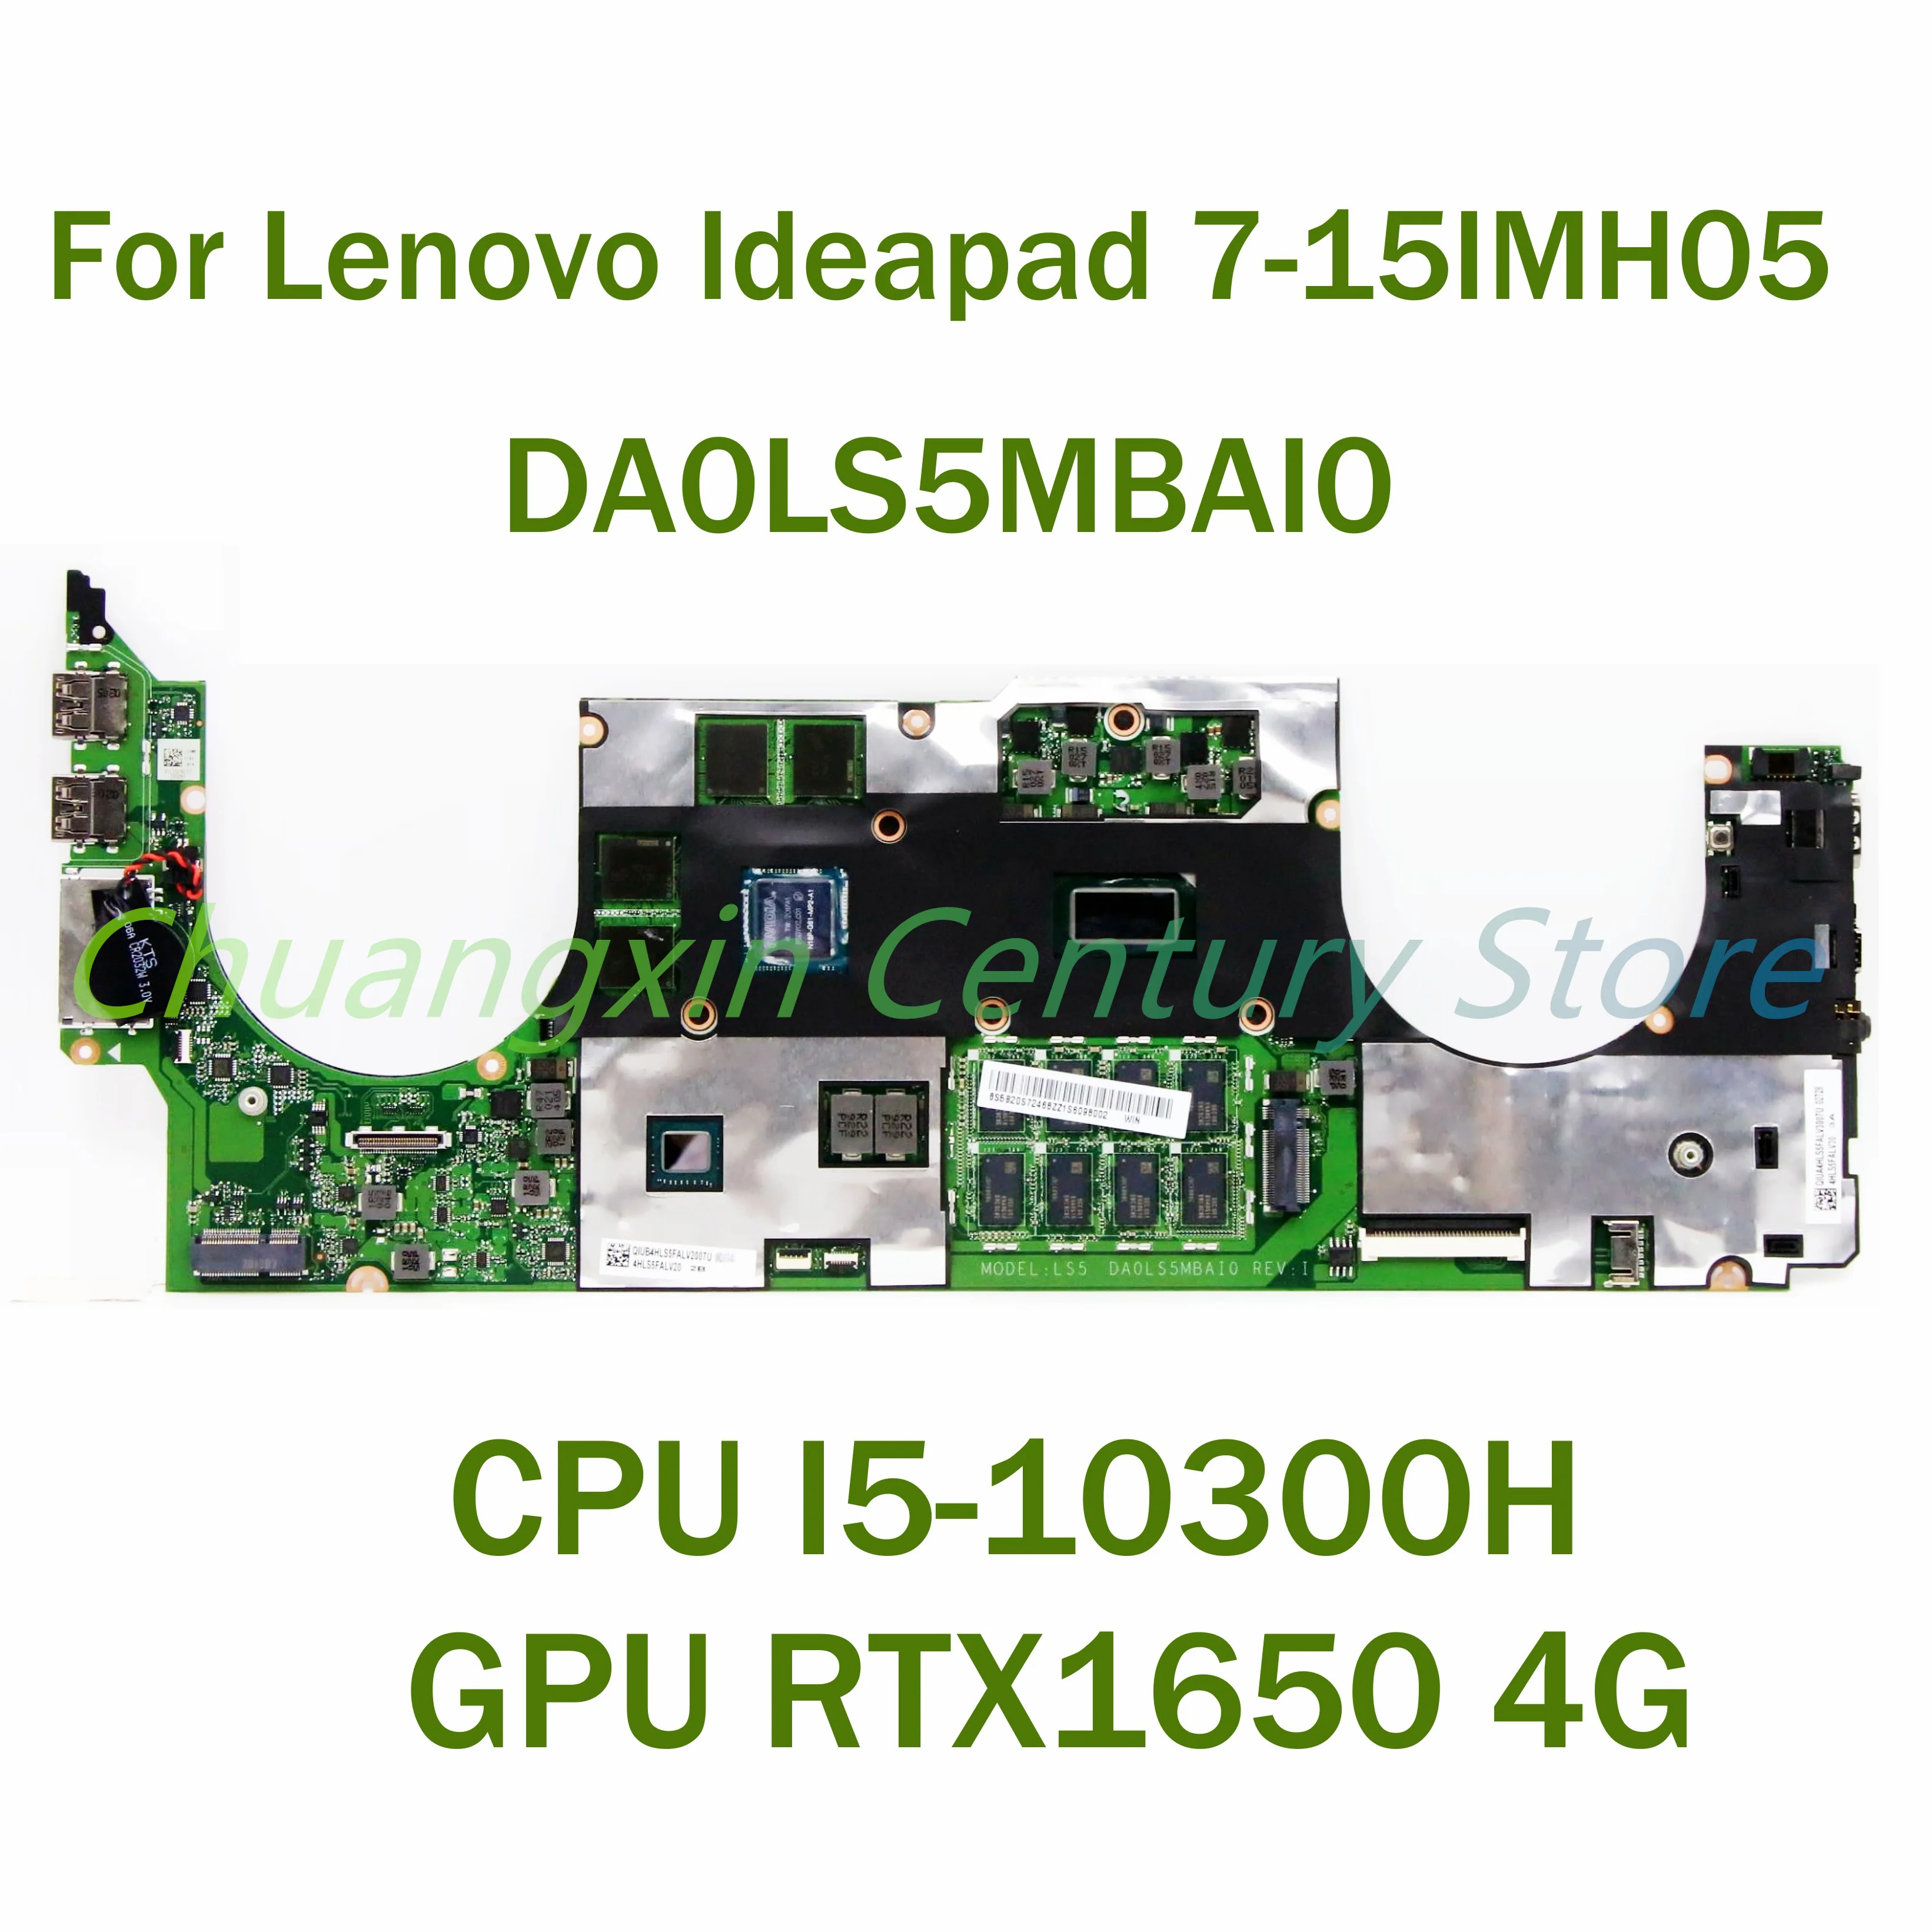 

For Lenovo Ideapad 7-15IMH05 laptop motherboard DA0LS5MBAI0 with I5-10300H I7-10750H CPU GPU GTX1650 8G RAM DDR4